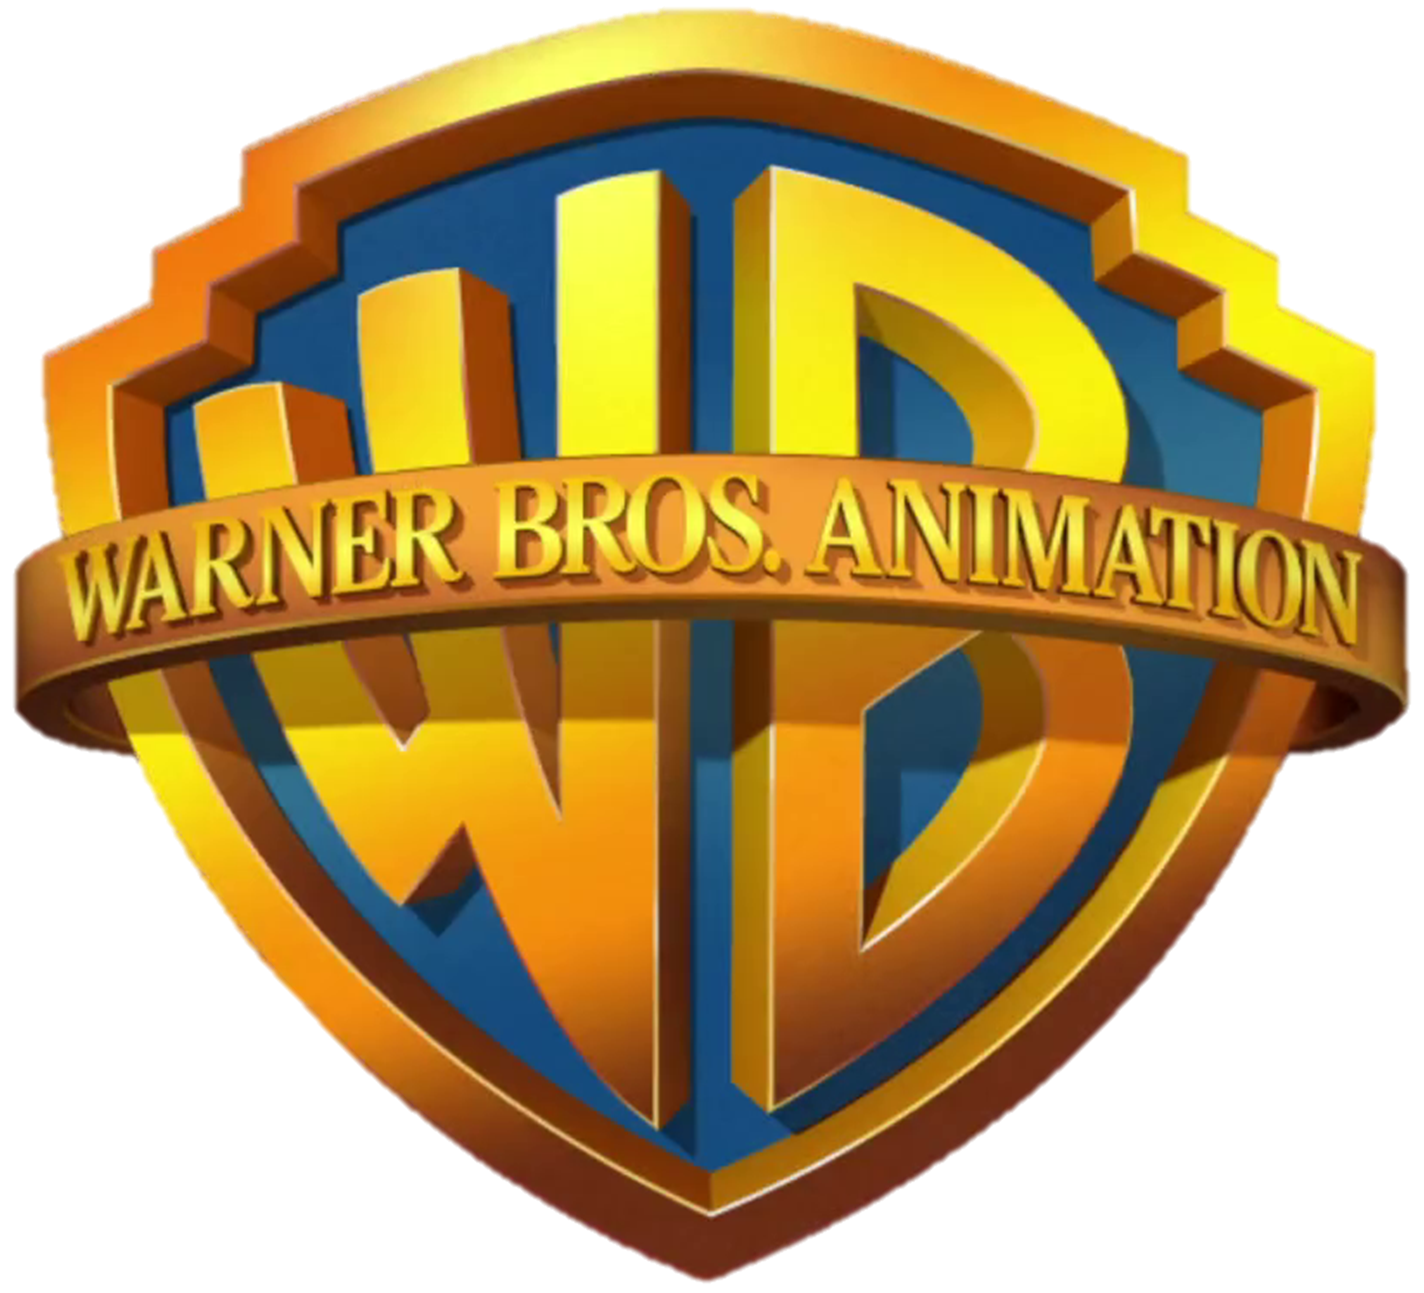 Варнер фф. Уорнер БРОС. Уорнер БРОС анимейшн. Кинокомпания Warner brothers. Значок Warner brothers.